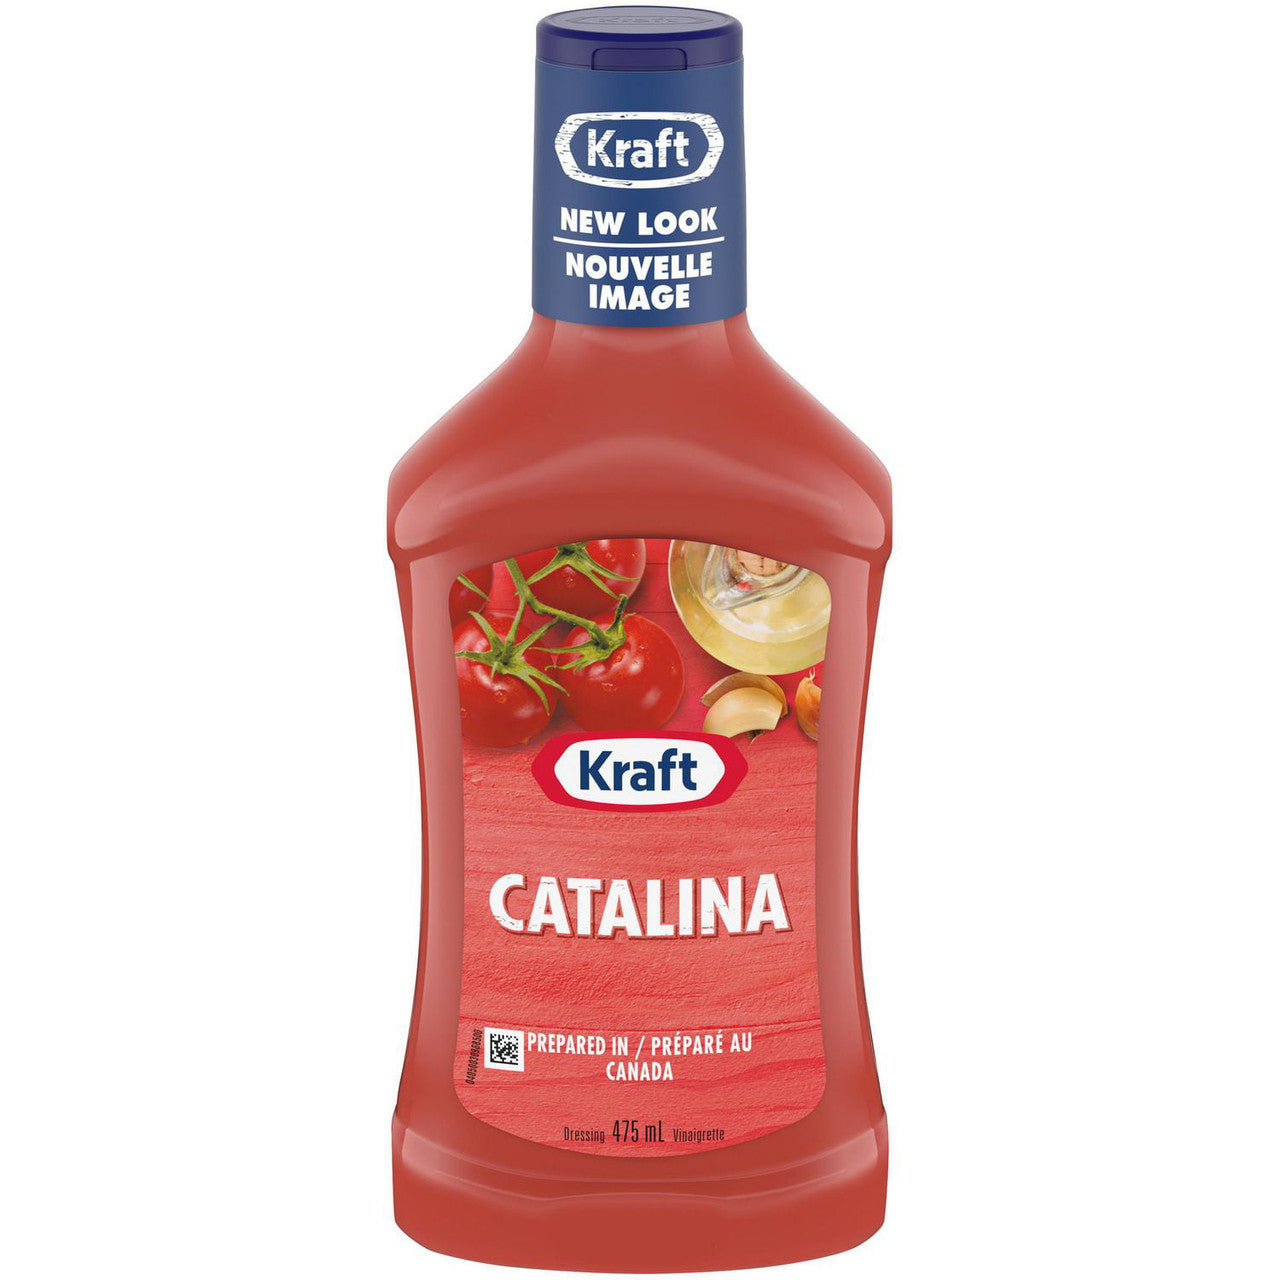 Kraft Catalina Dressing, 475mL/16 fl. oz., Bottle, {Imported from Canada}